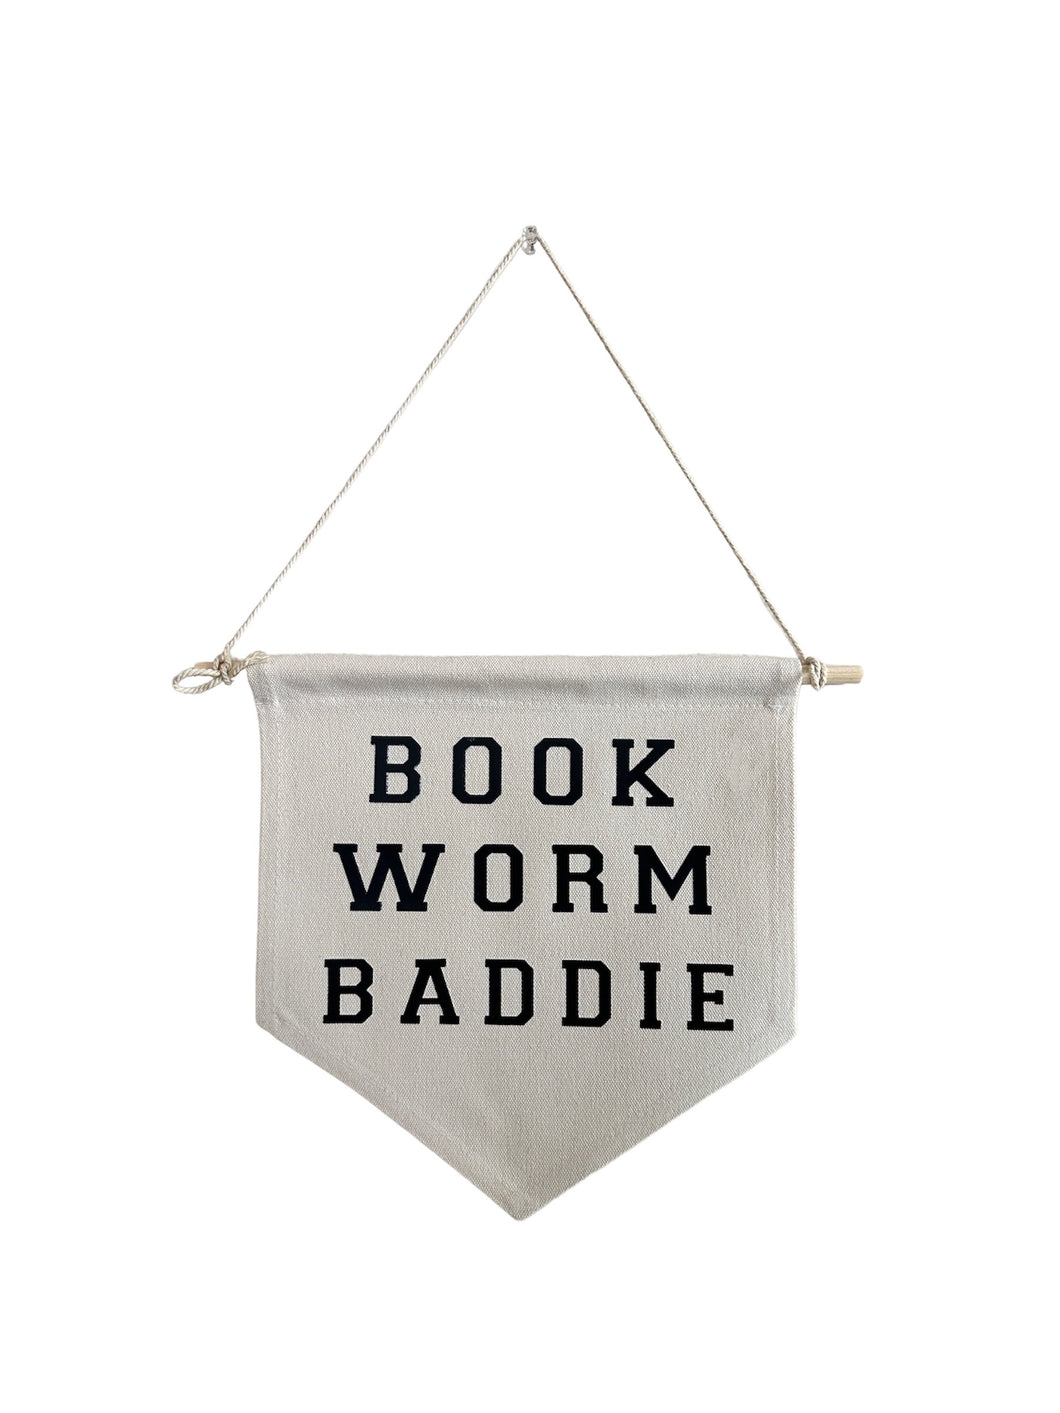 'Bookworm Baddie' Pennant (Medium)